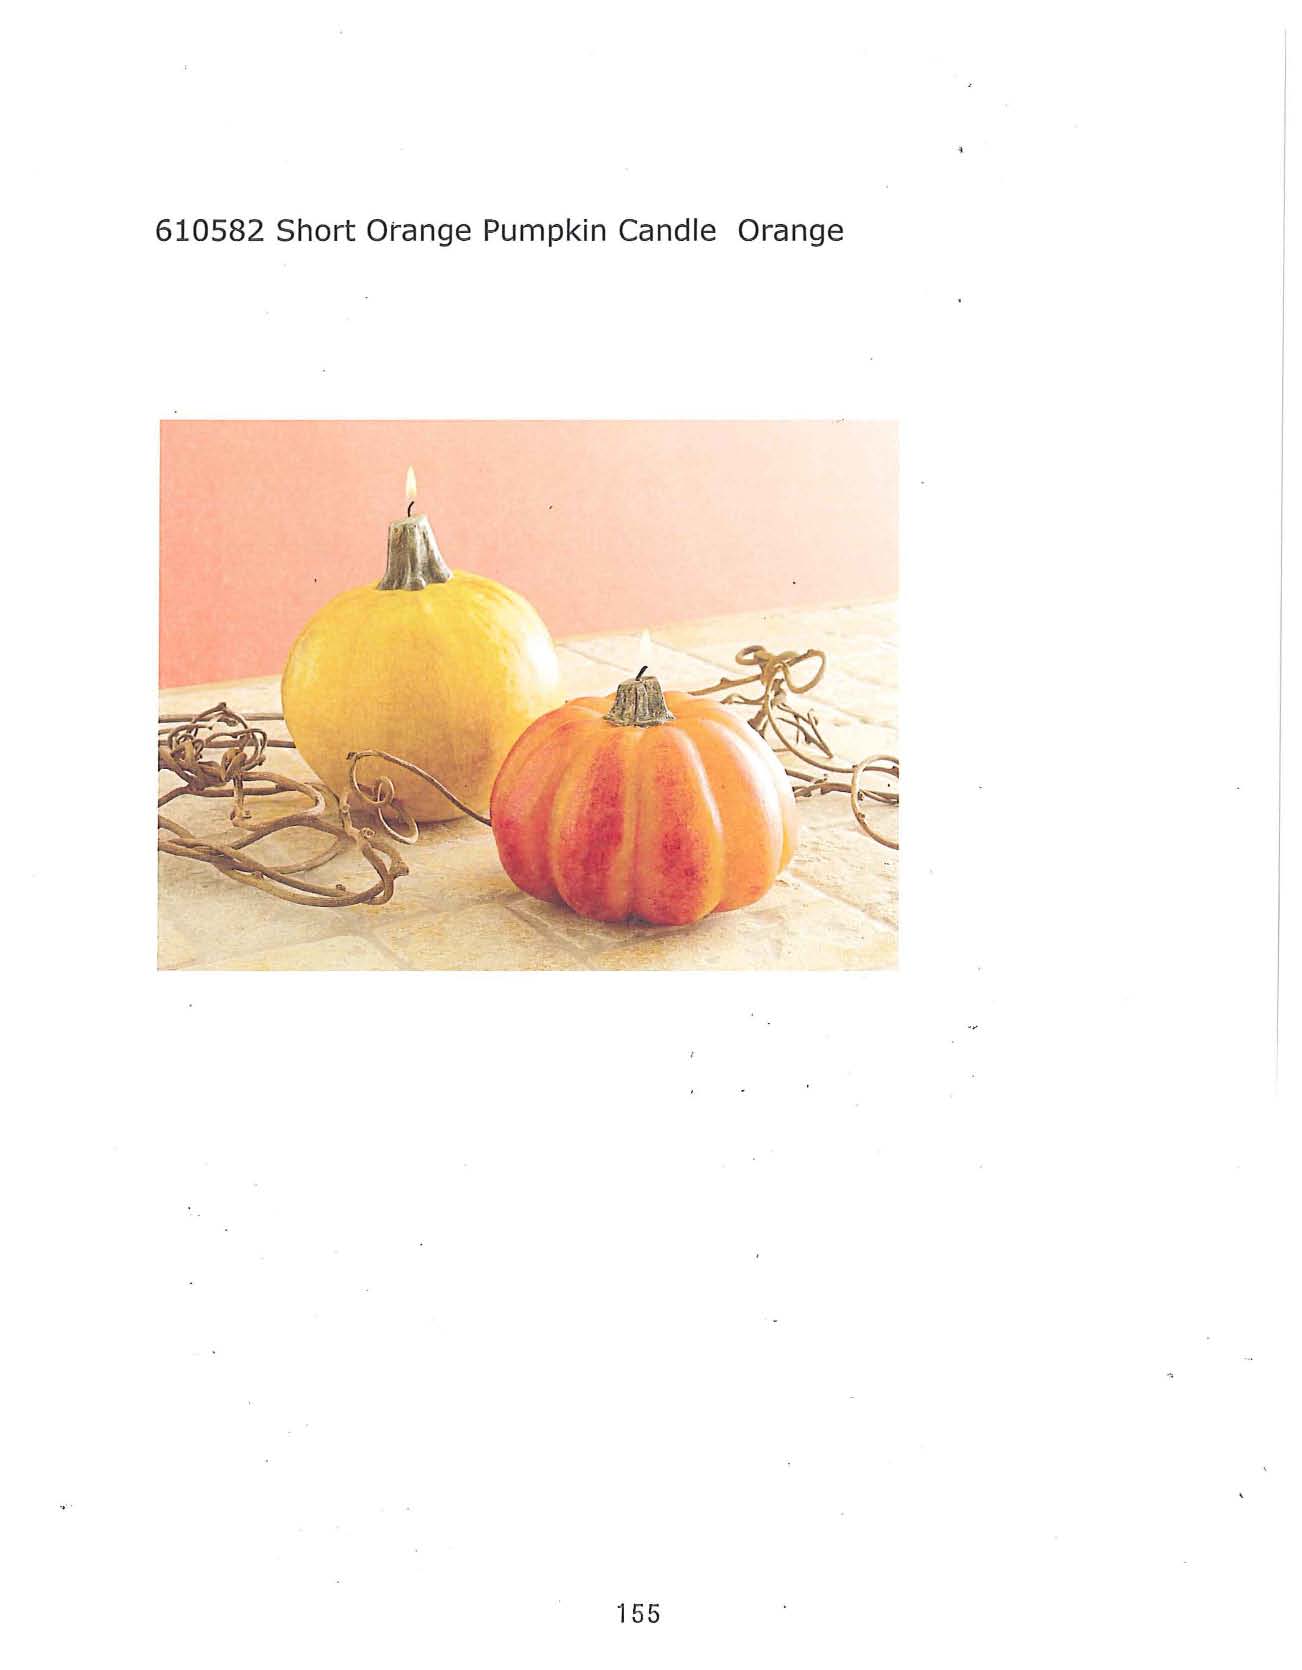 Short Orange Pumpkin Candle - Orange